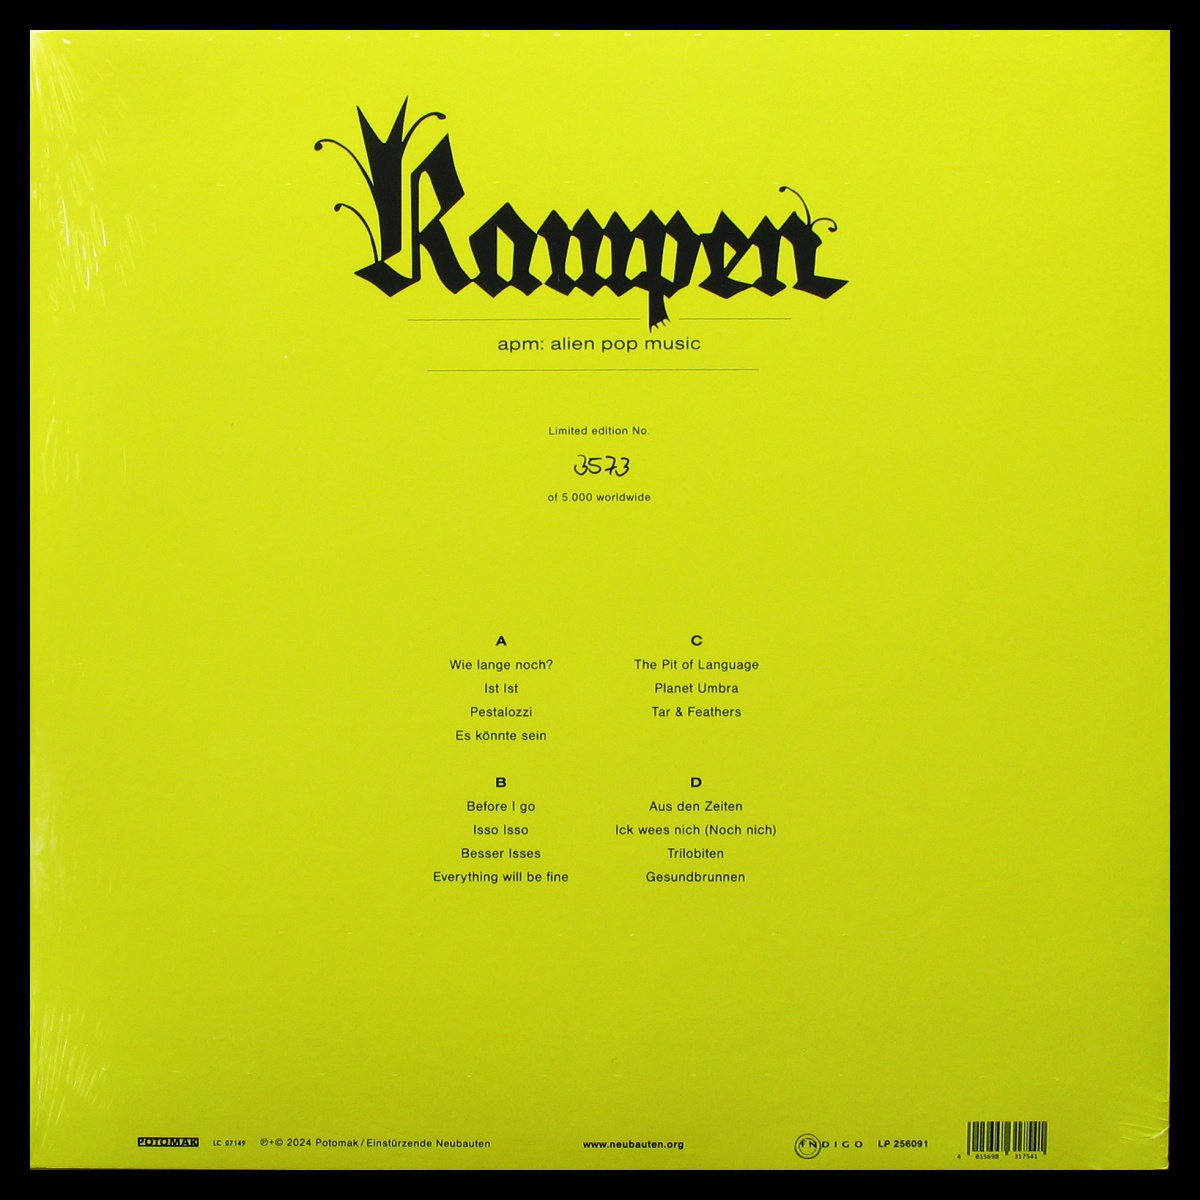 LP Einsturzende Neubauten — Rampen - APM: Alien Pop Music (2LP, coloured vinyl) фото 2